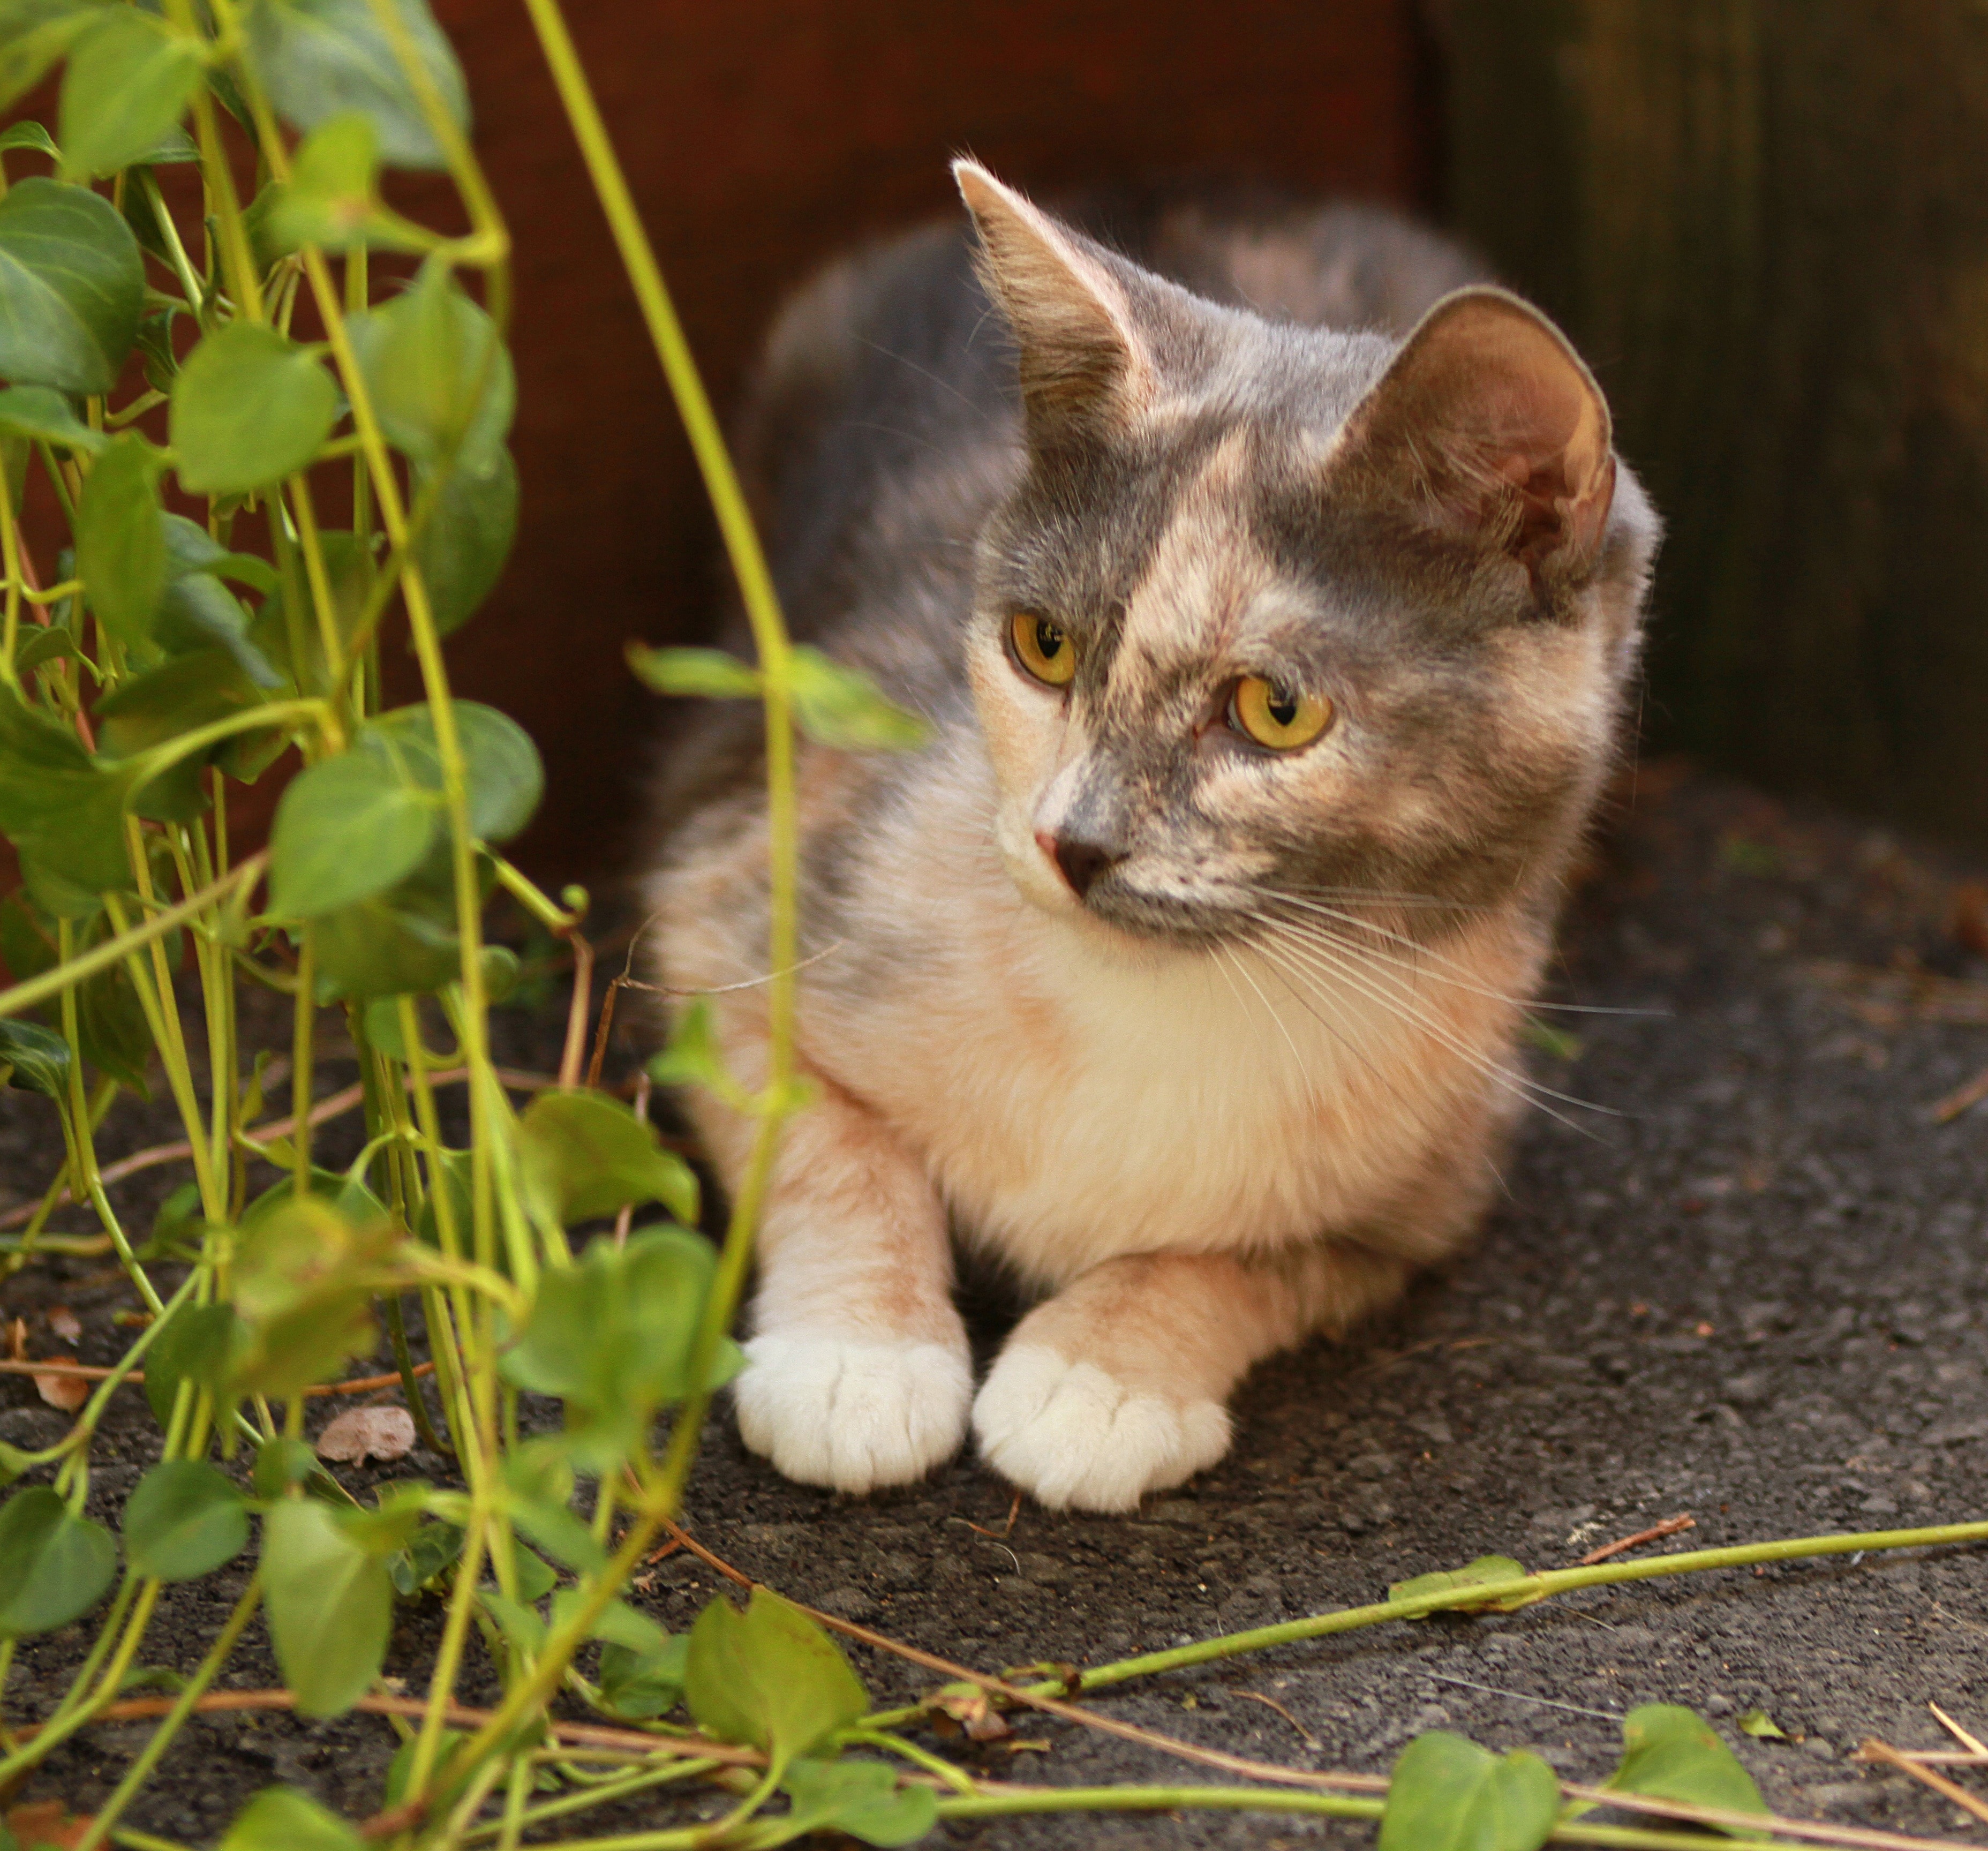 beige and grey fur cat near green vine plant